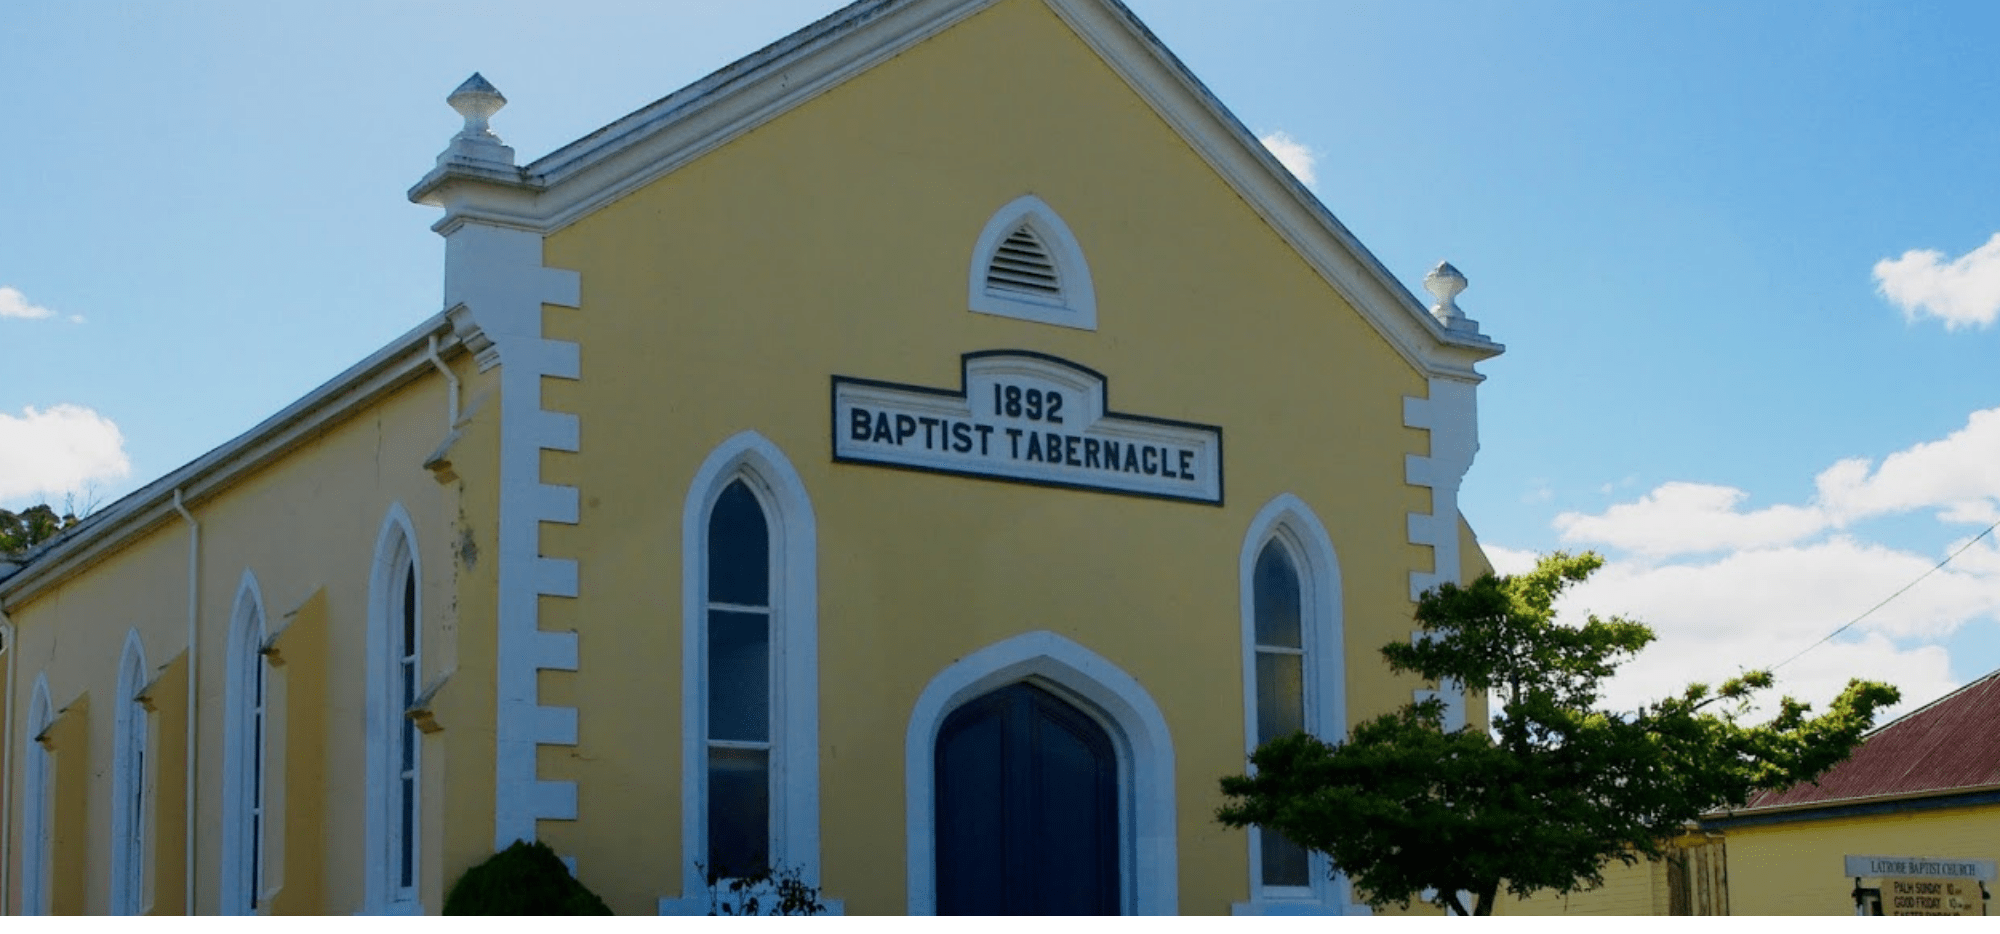 Latrobe Baptist church profile, photo credit Duncan Grant 2018